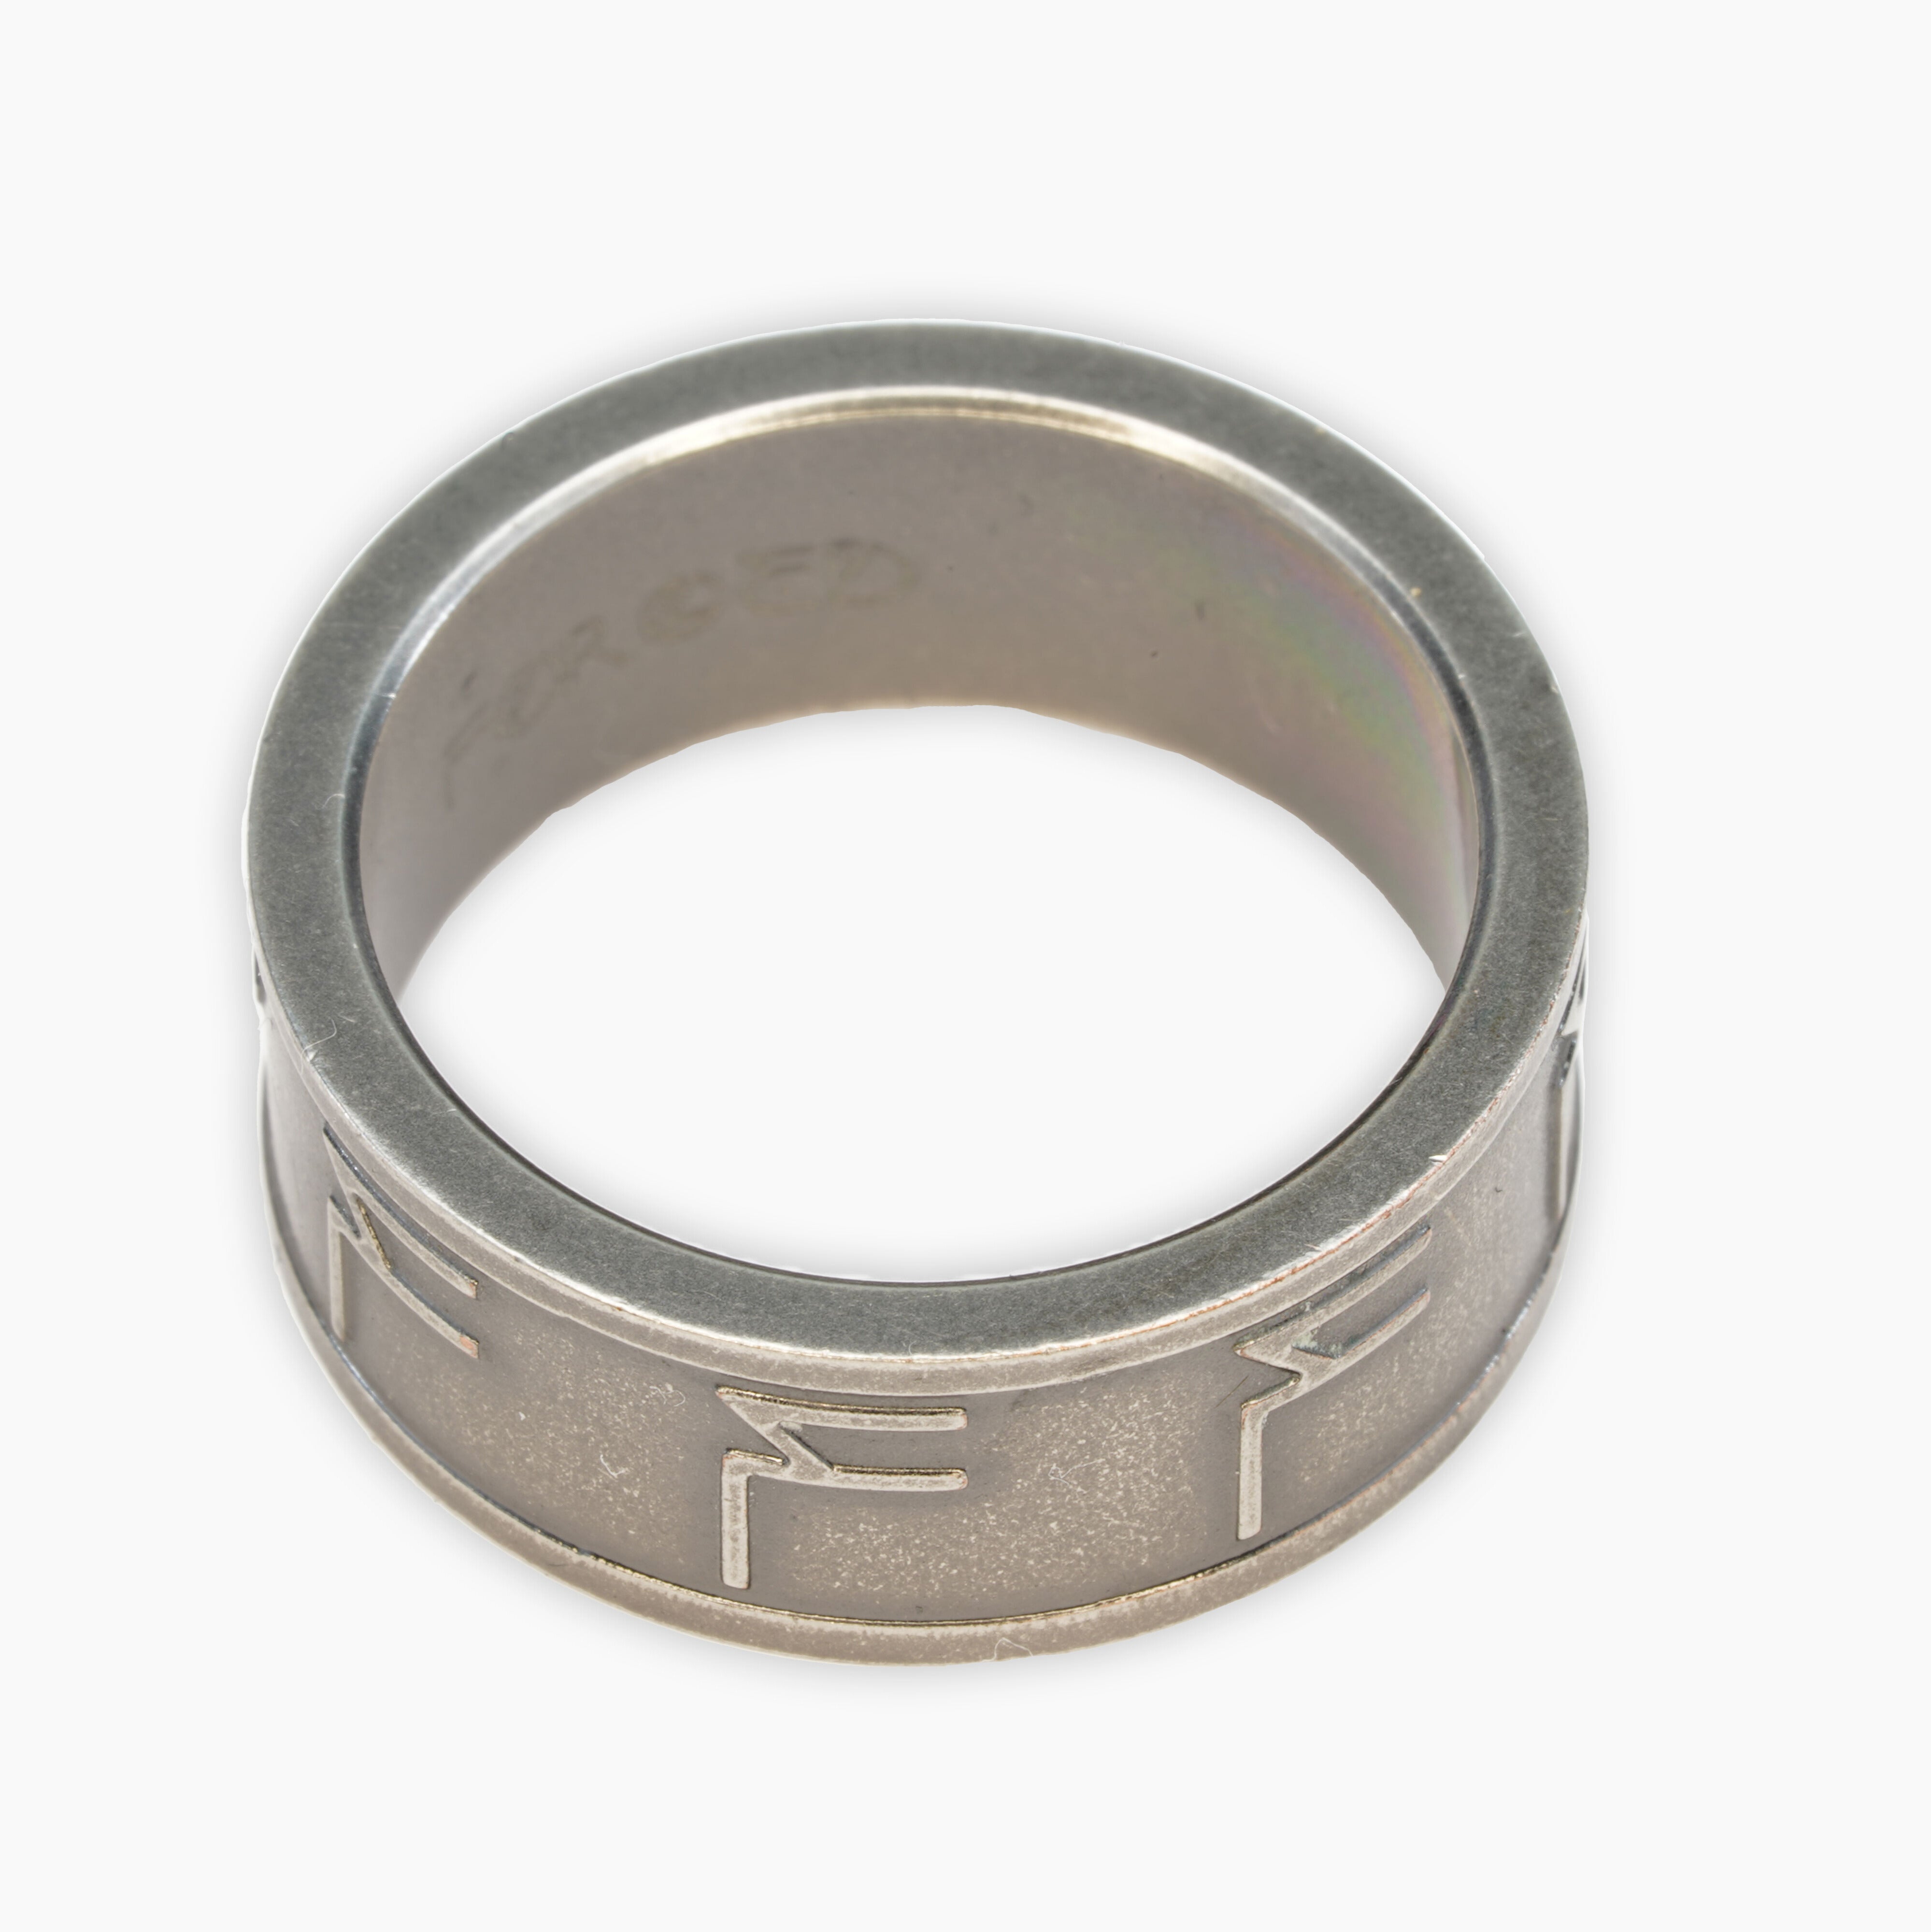 Signature Ring (Silver)